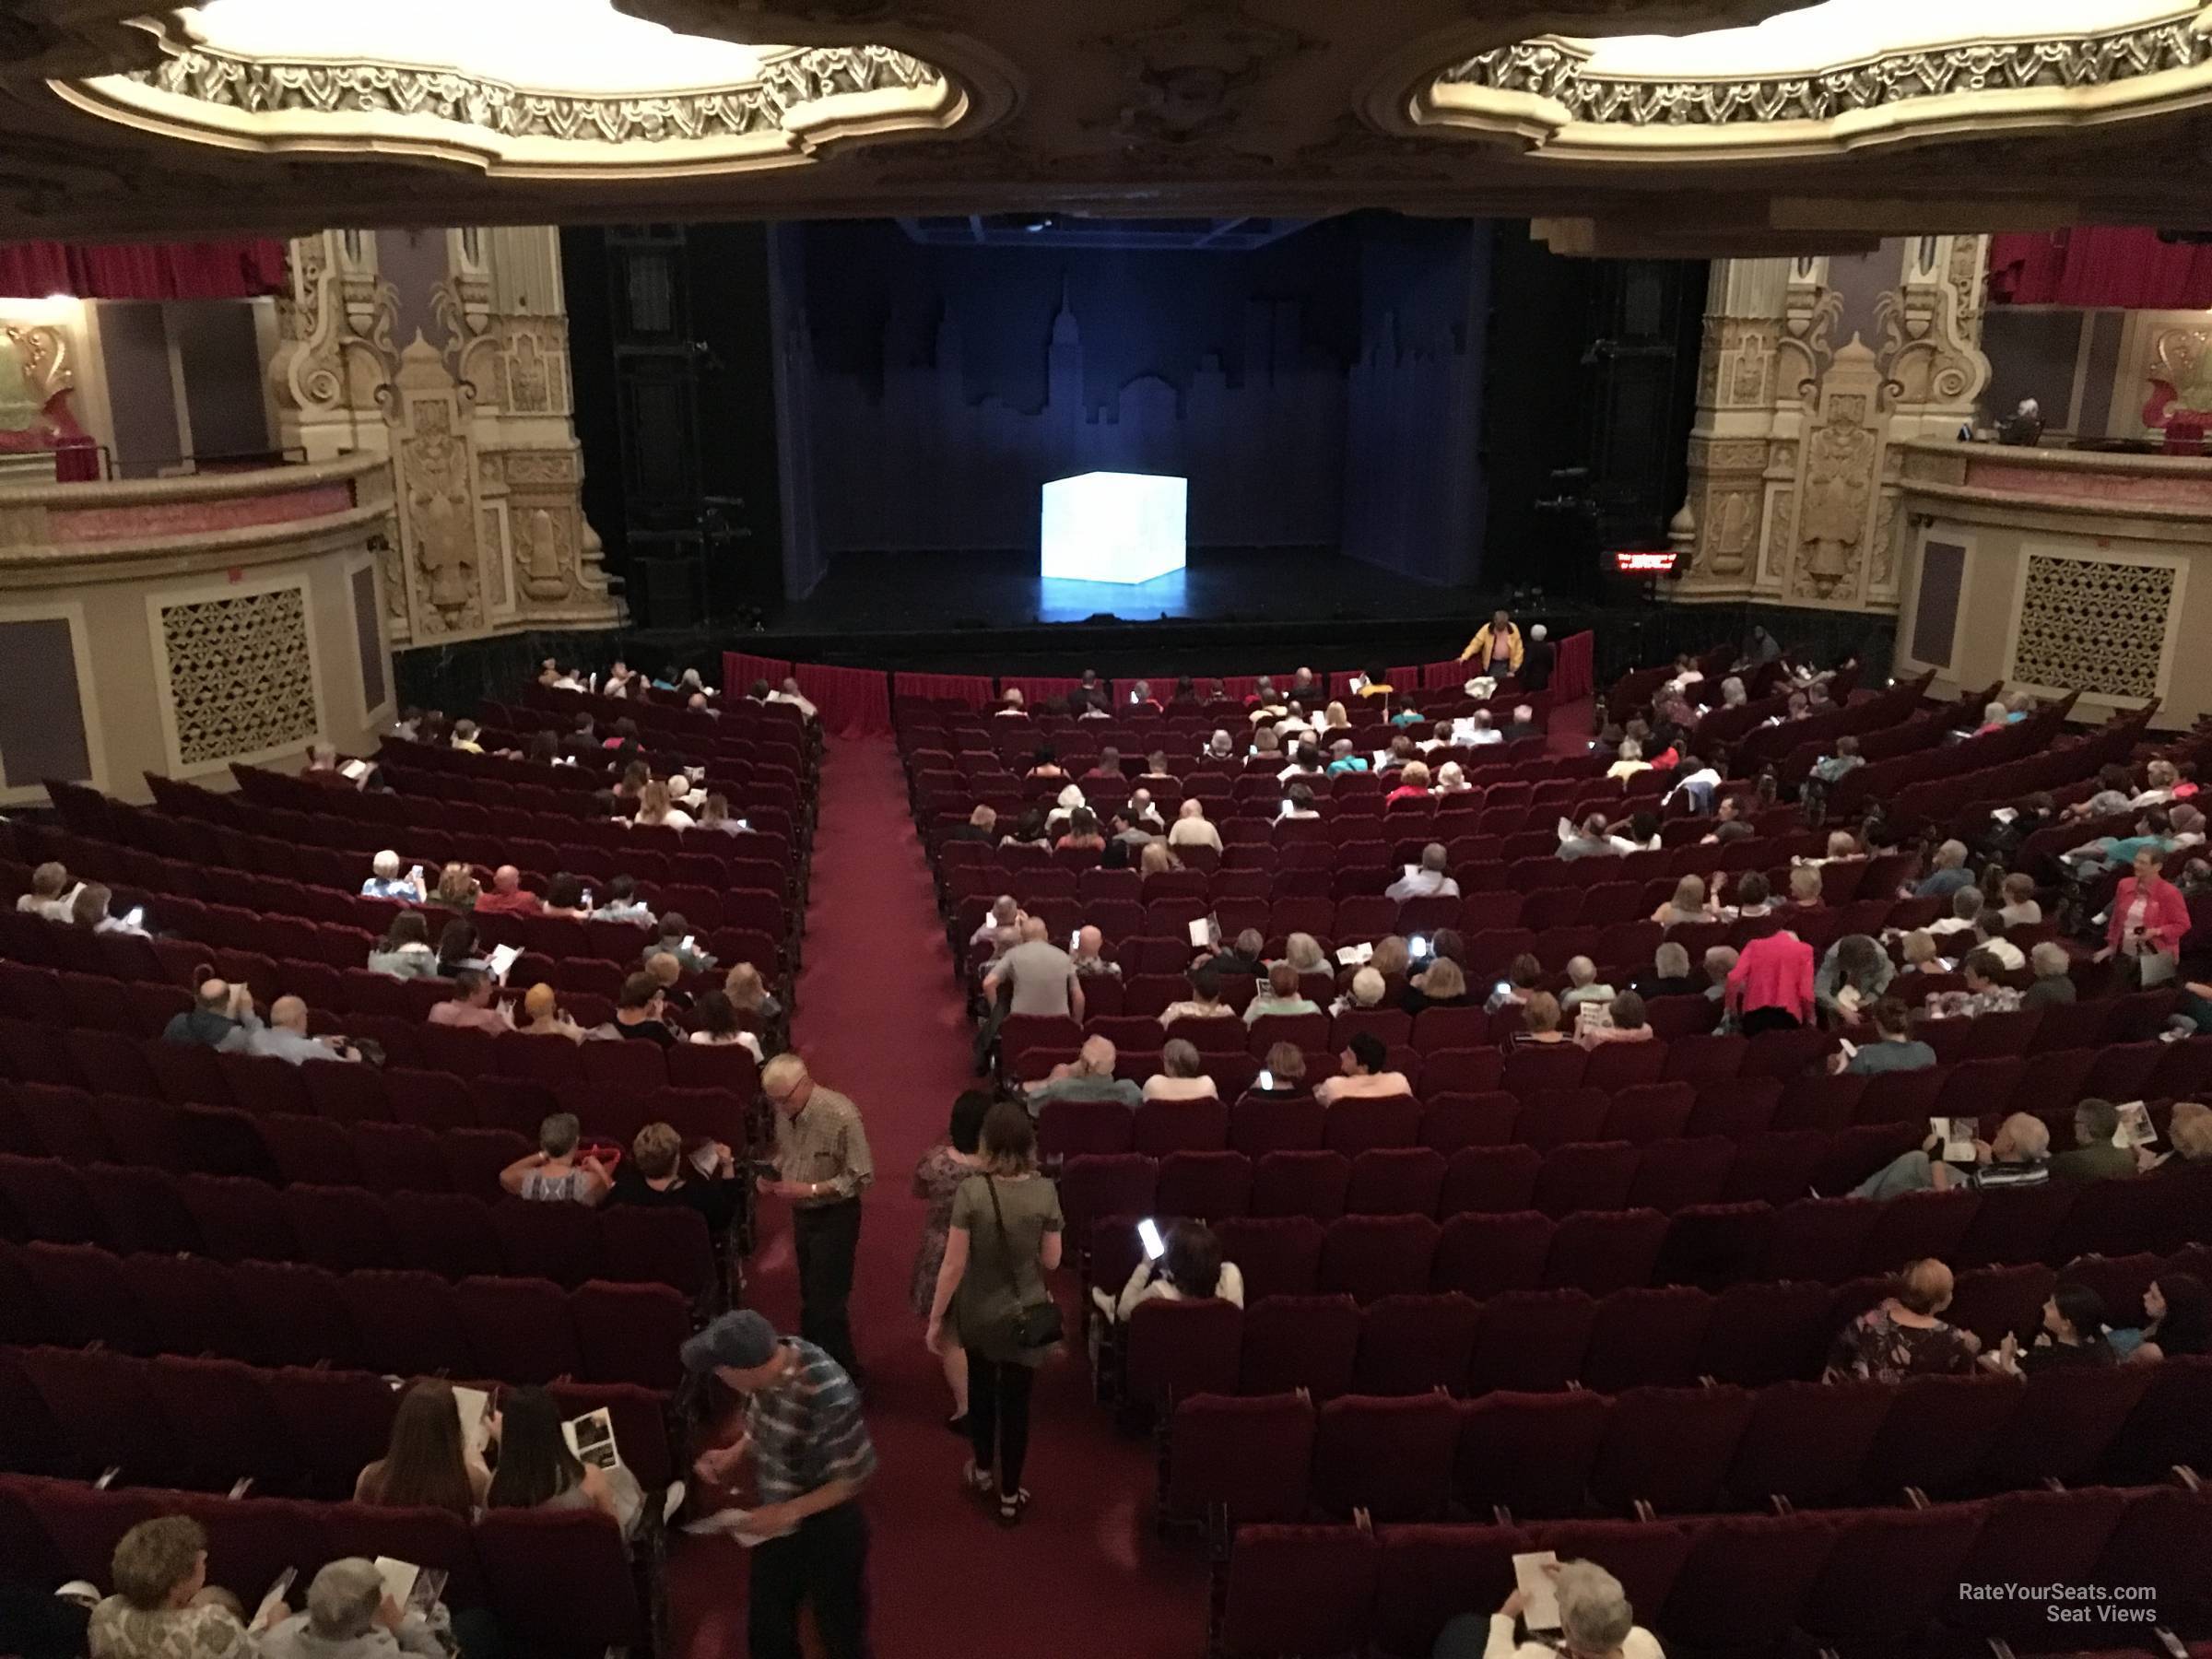 dress circle left center, row c seat view  - nederlander theatre (chicago)